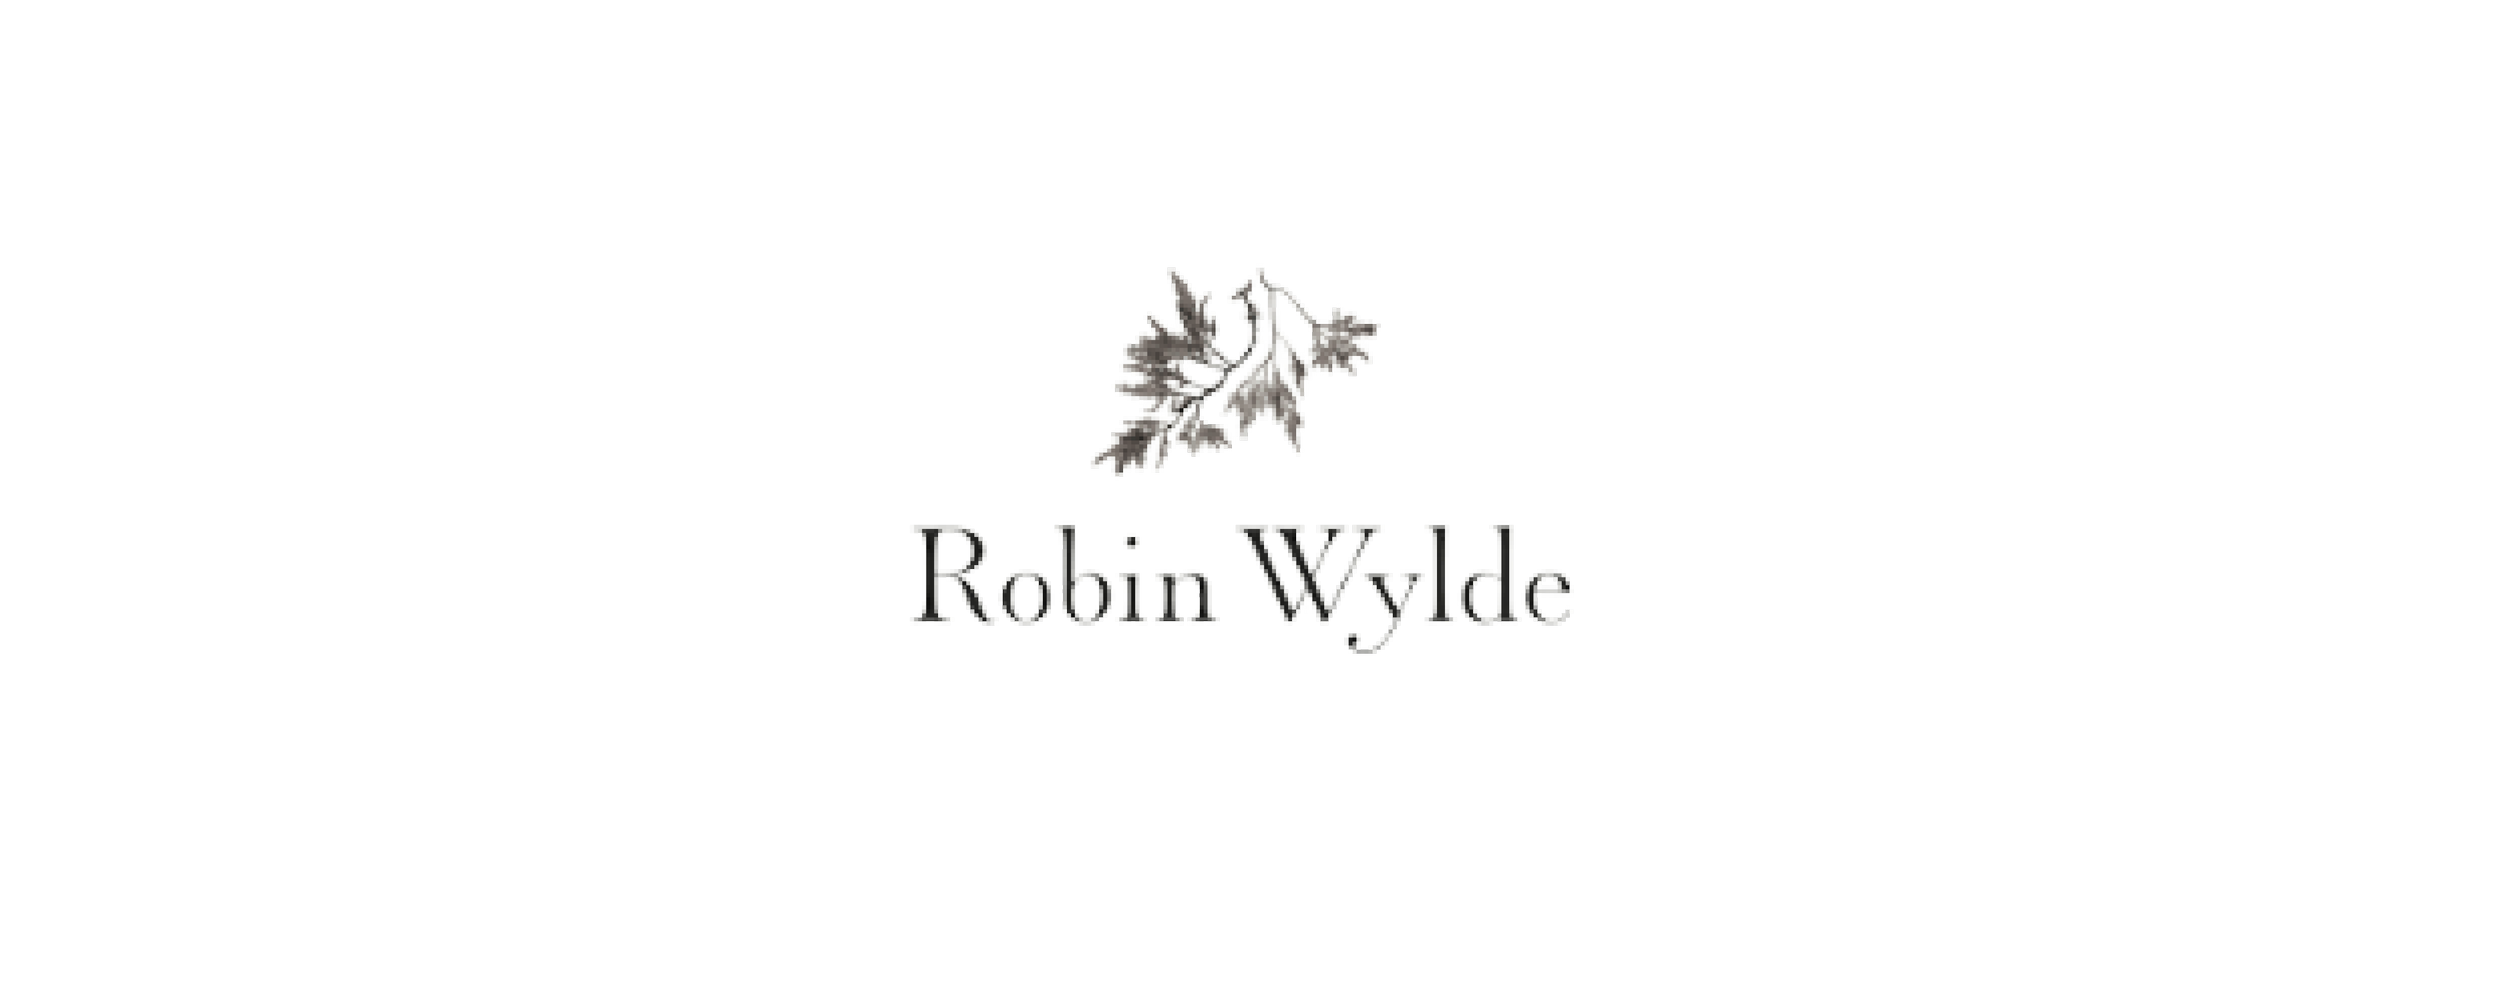 Robin Wylde - SoS.png